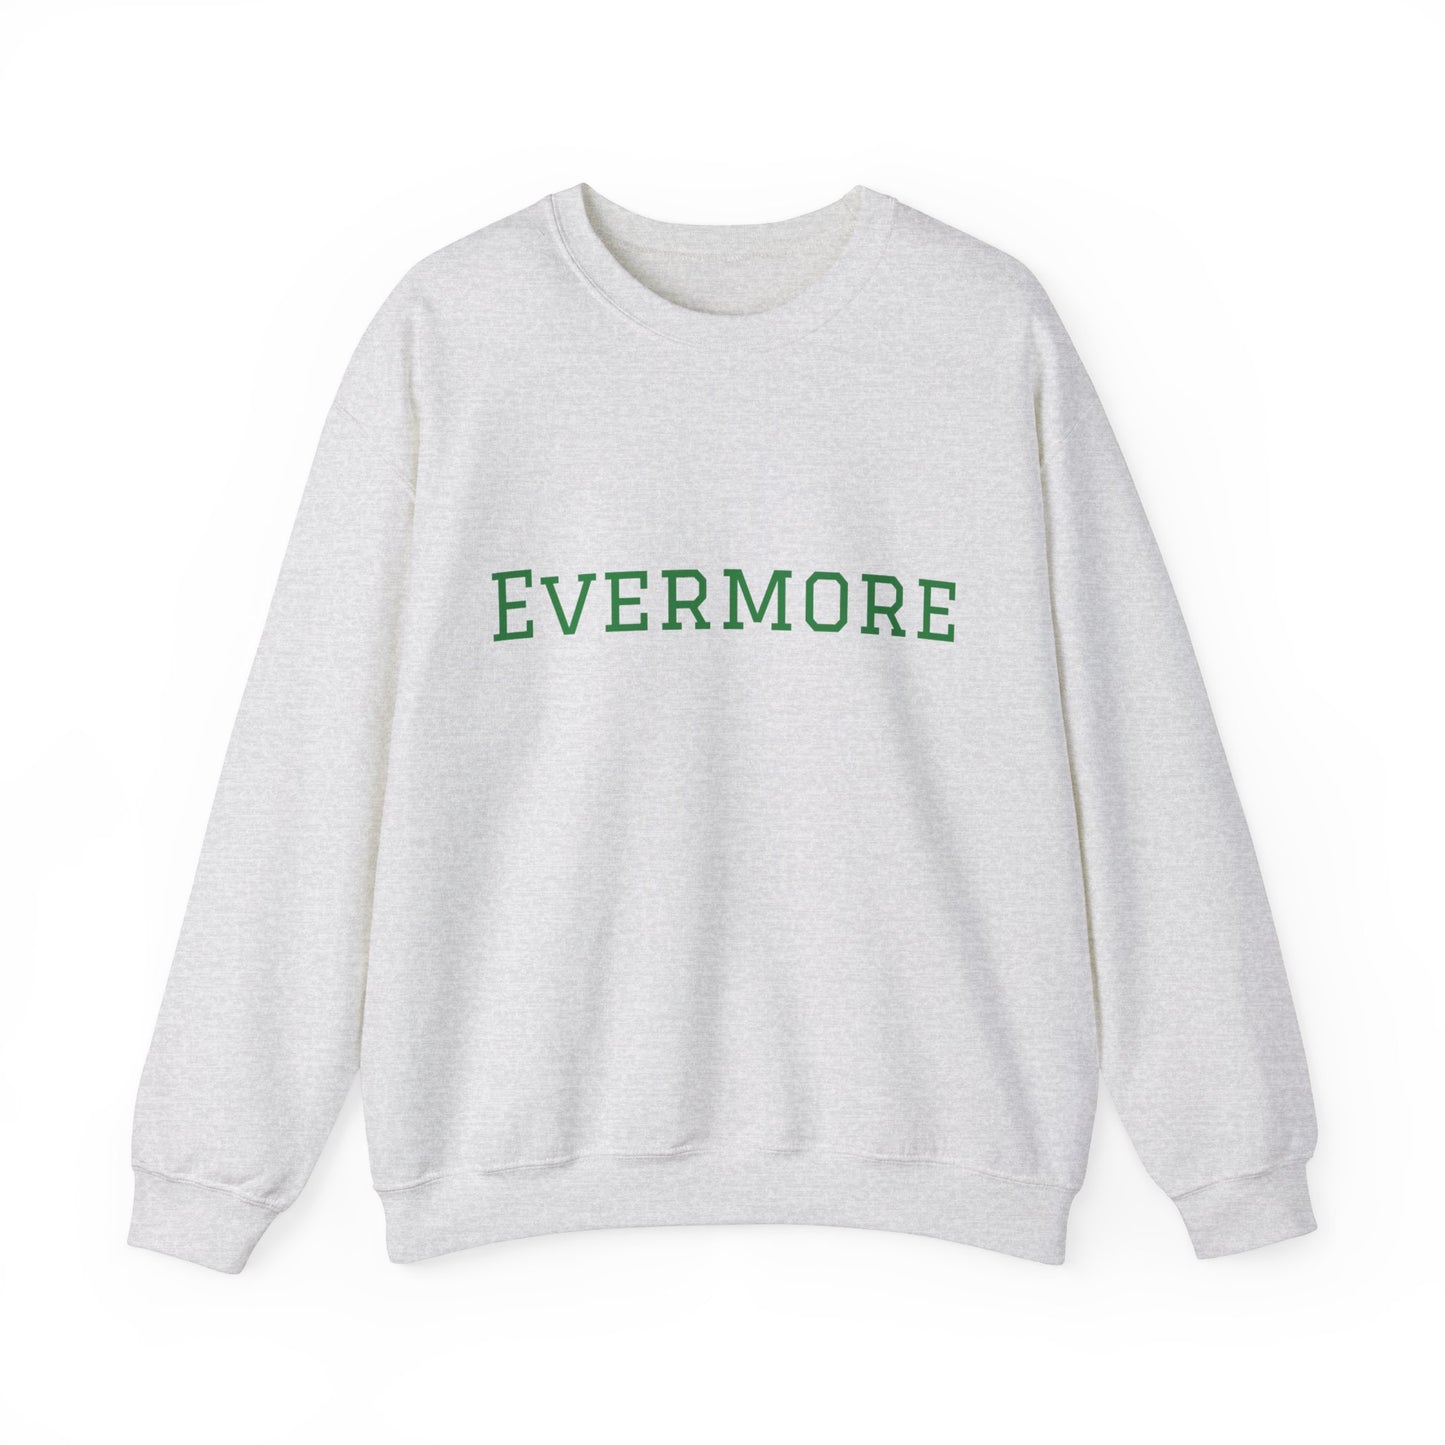 Taylor Swift Evermore Era Sweatshirt (Unisex)